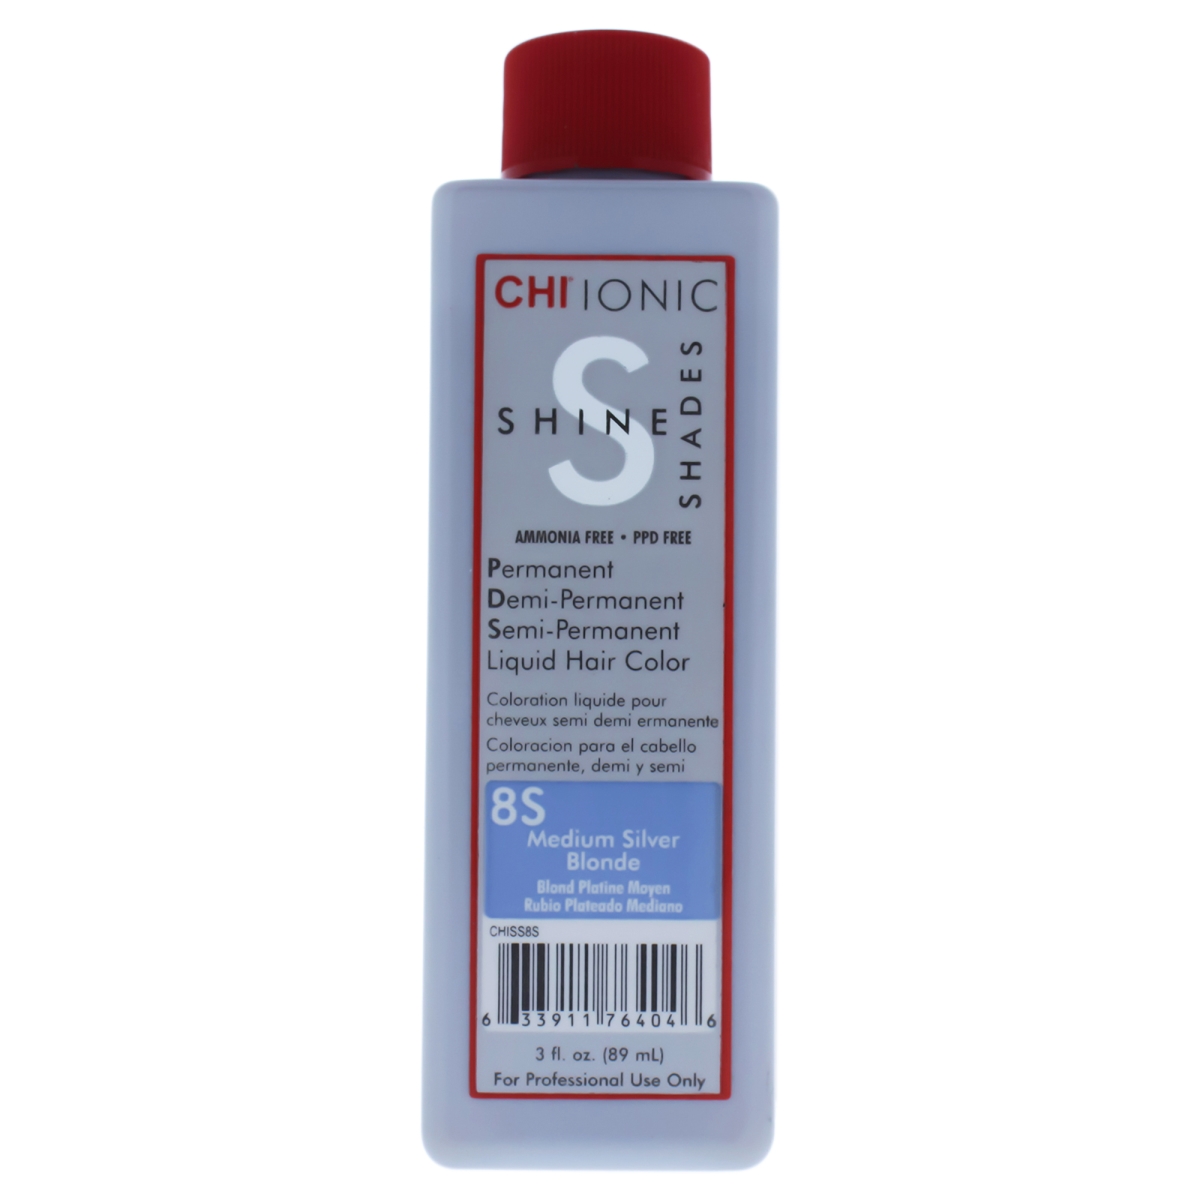 I0084051 Ionic Shine Shades Liquid Hair Color For Unisex - 8s Medium Silver Blonde - 3 Oz